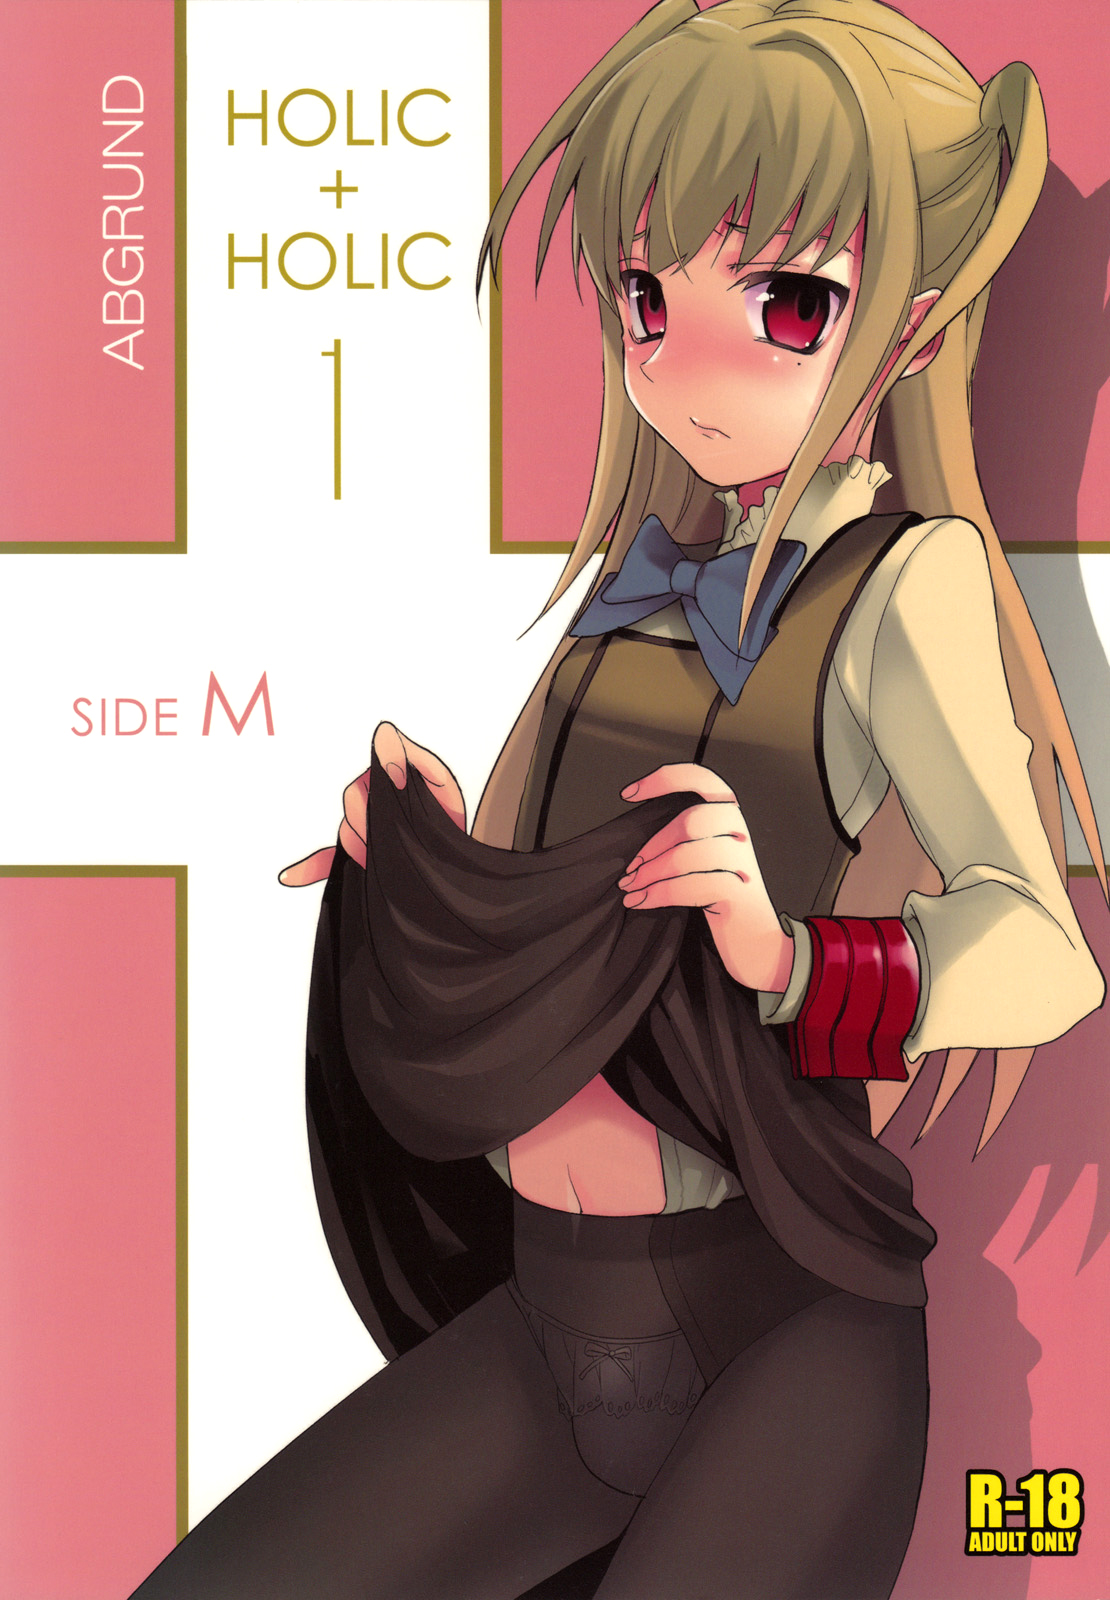 HolicHolic1_01